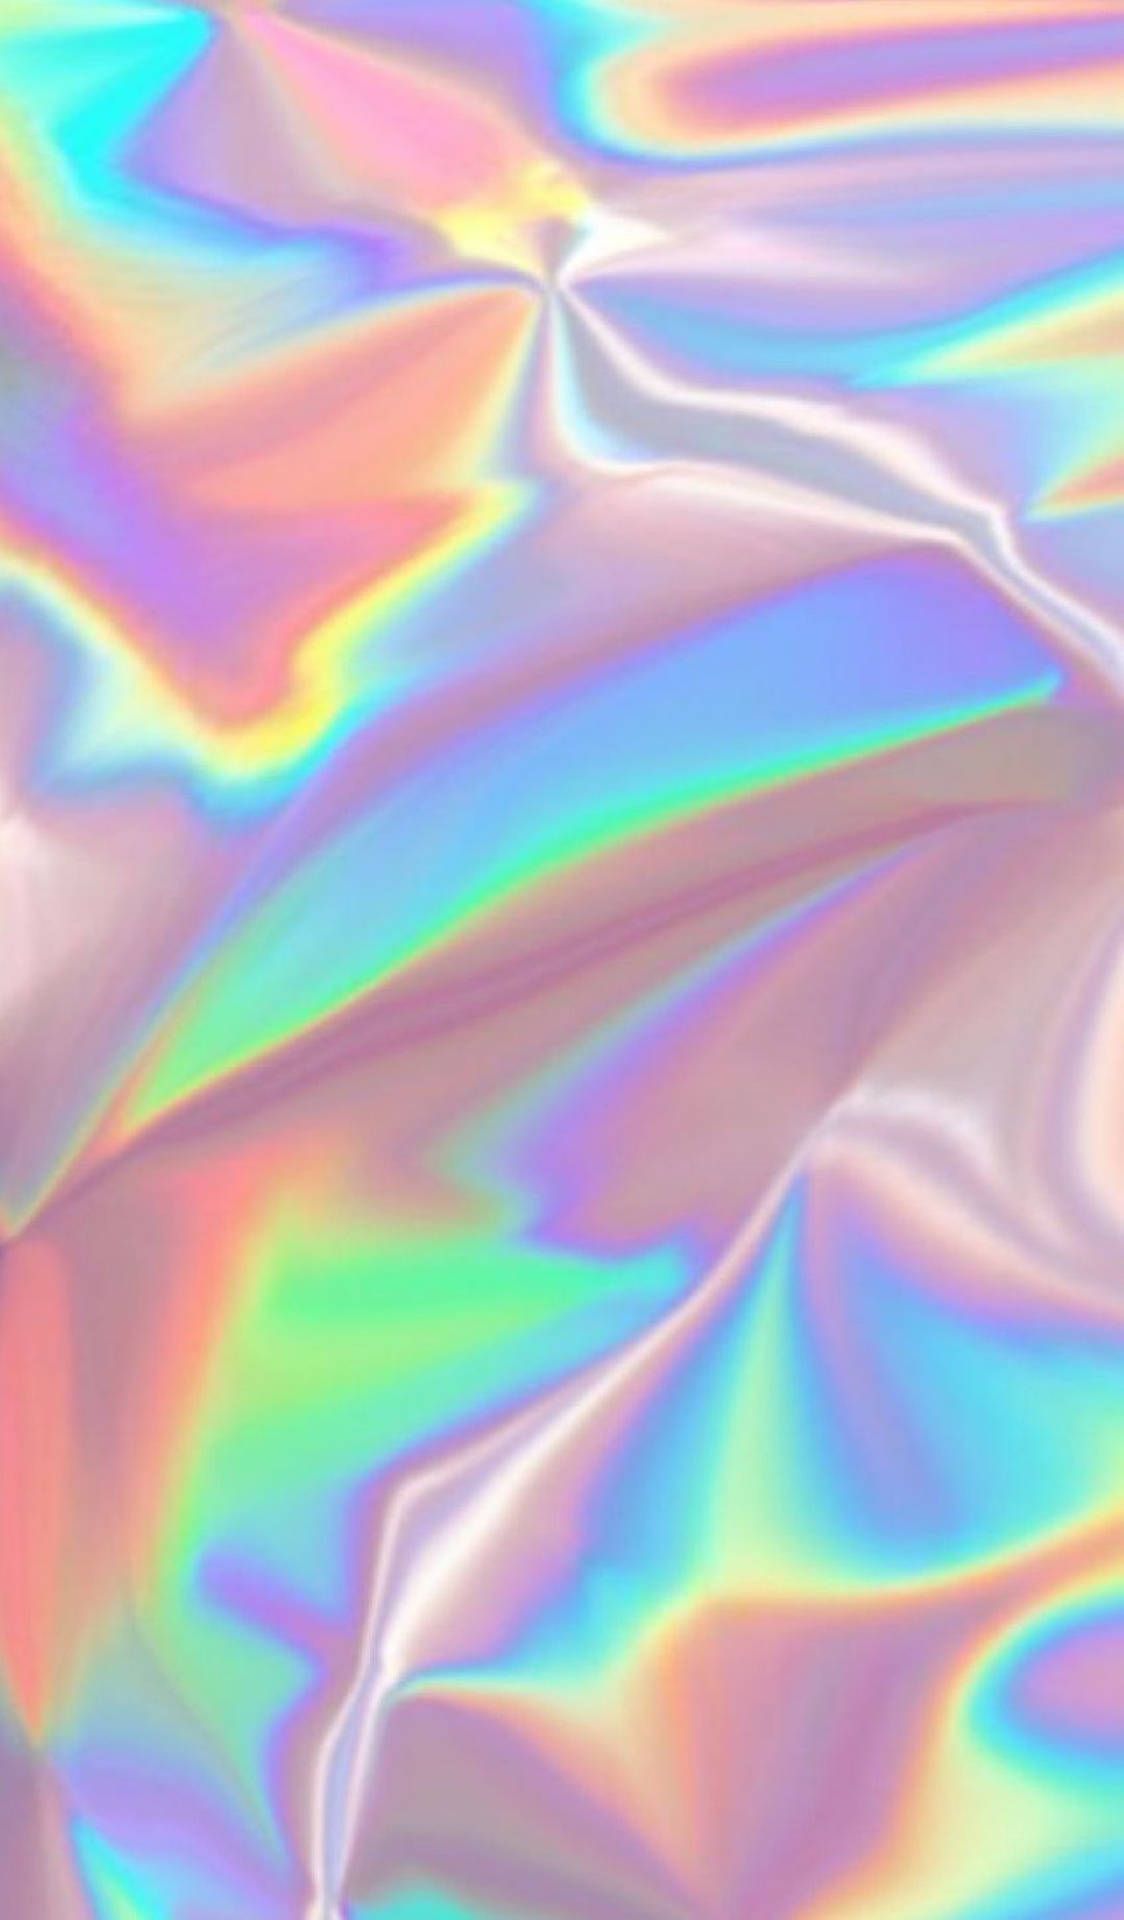 Free Pastel Rainbow Wallpaper Downloads, Pastel Rainbow Wallpaper for FREE